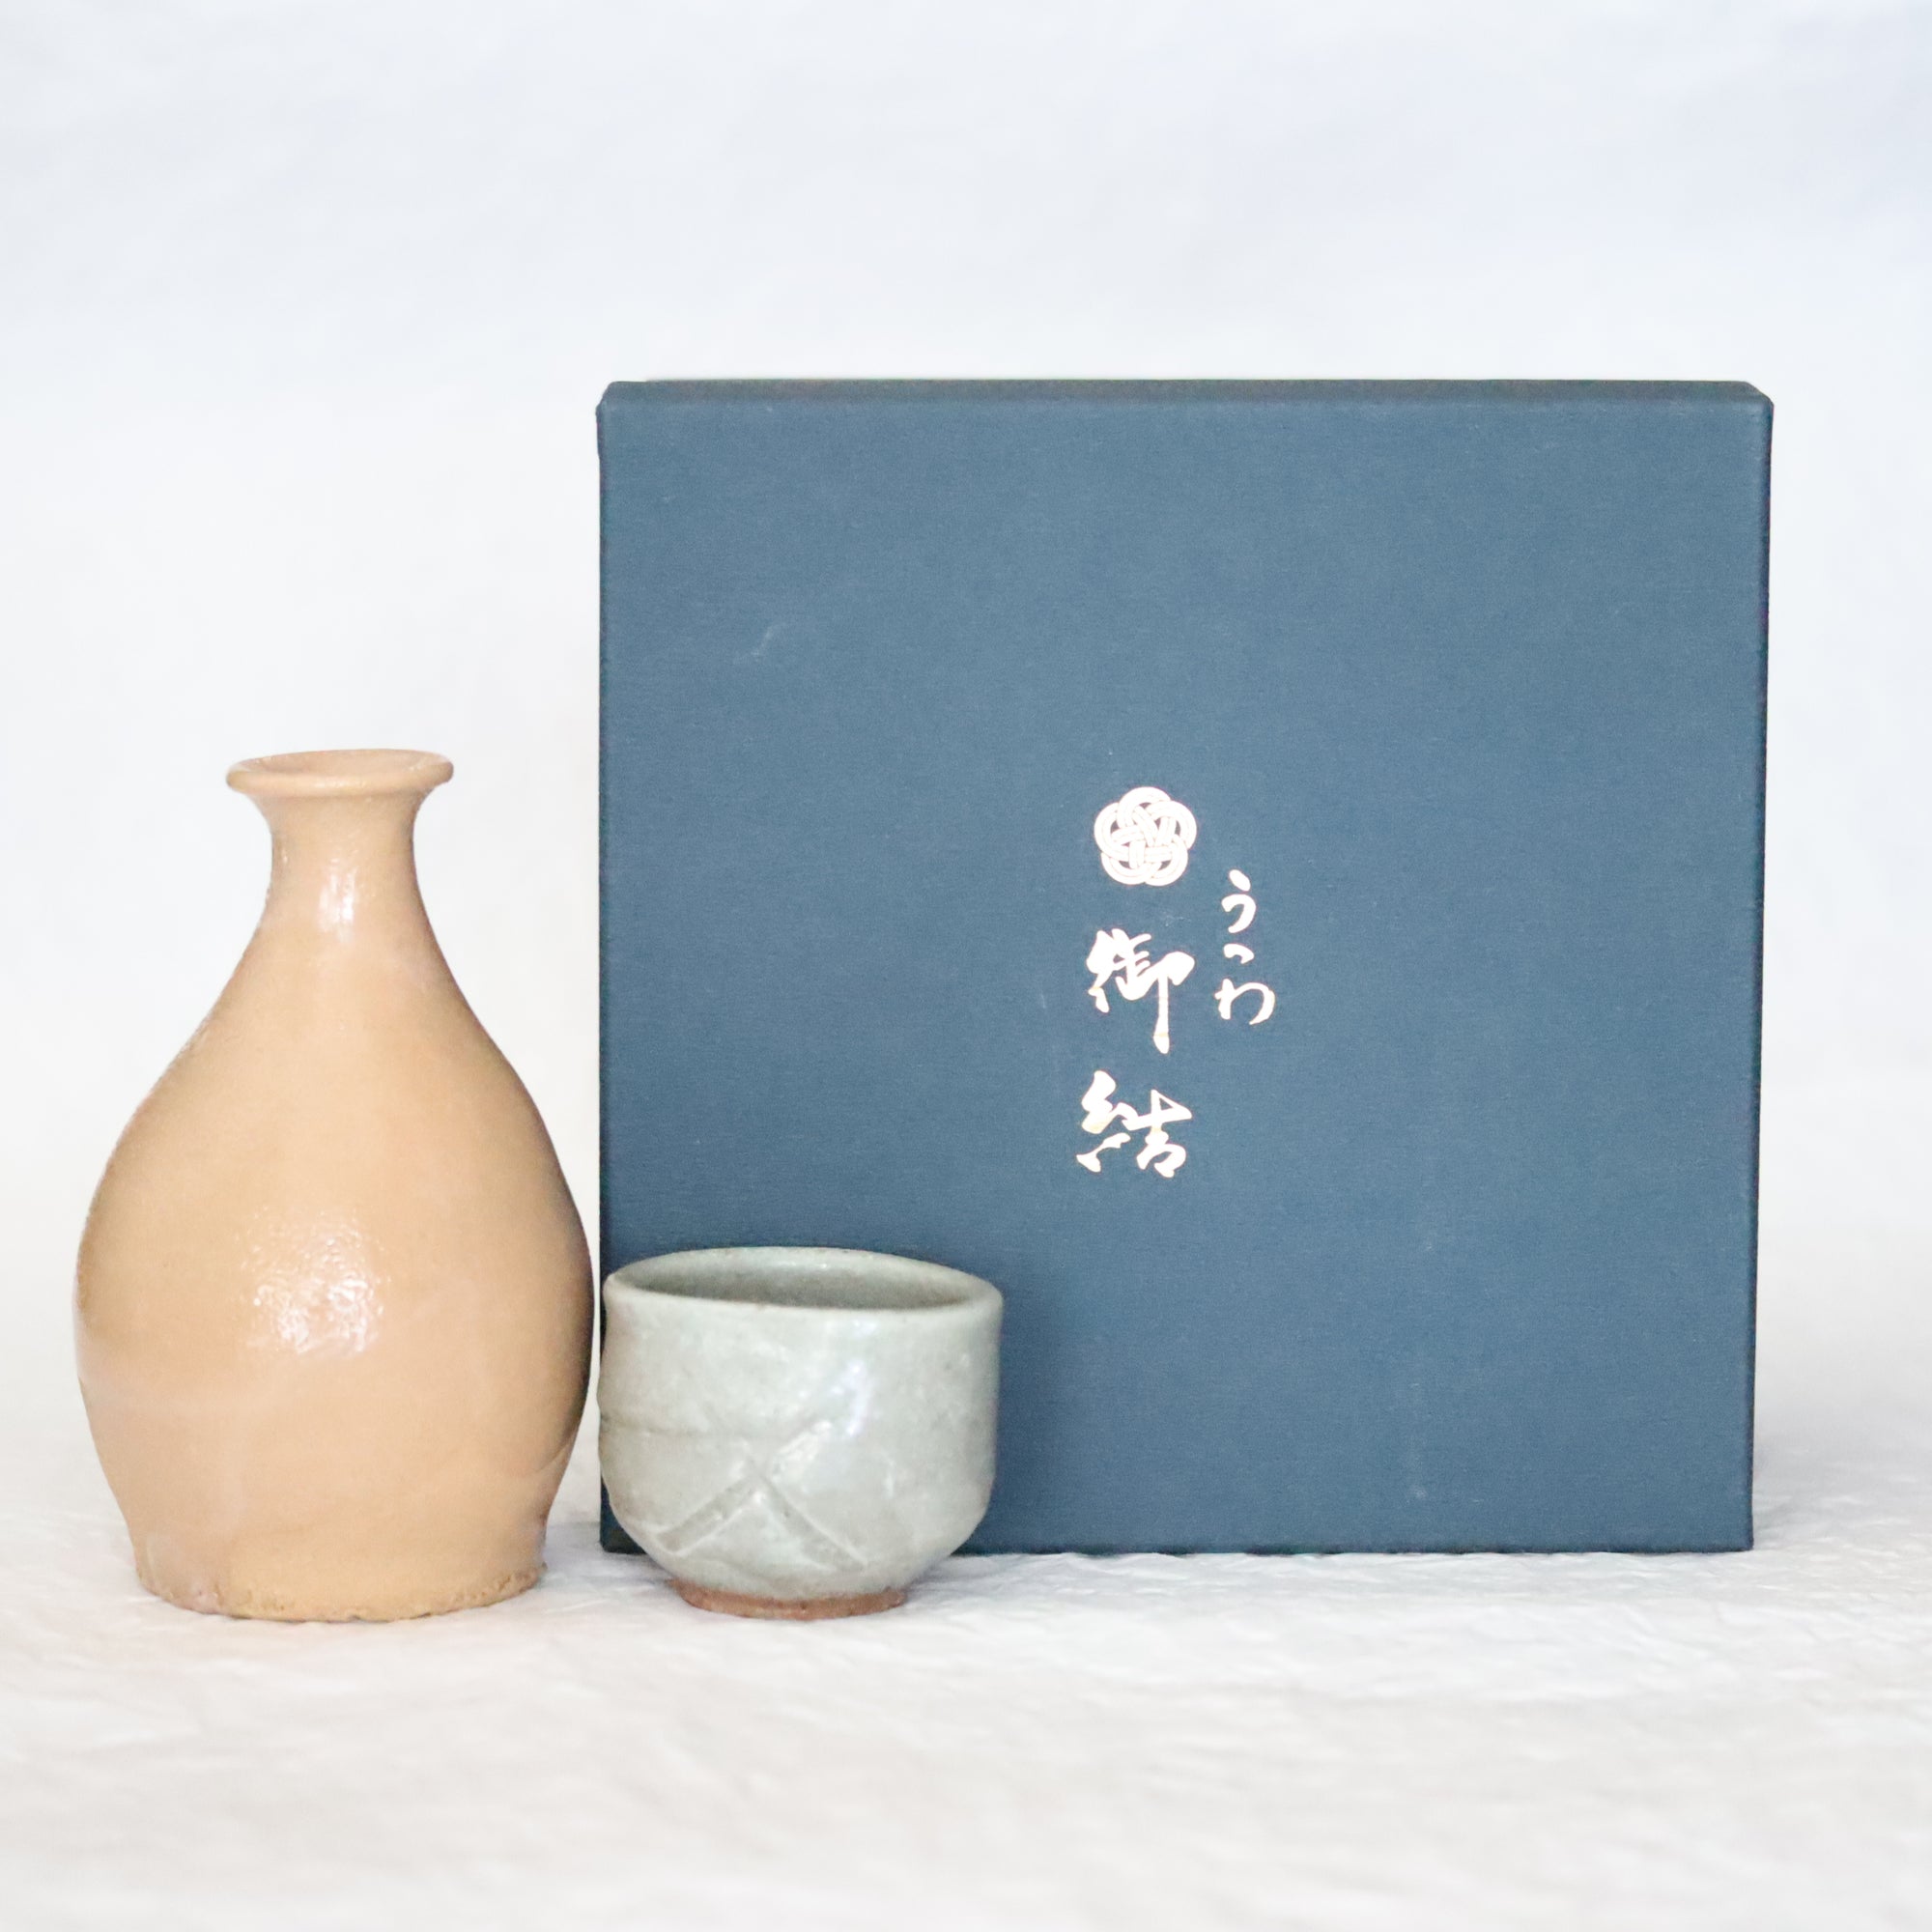 Miyu gift box S, M, L common 